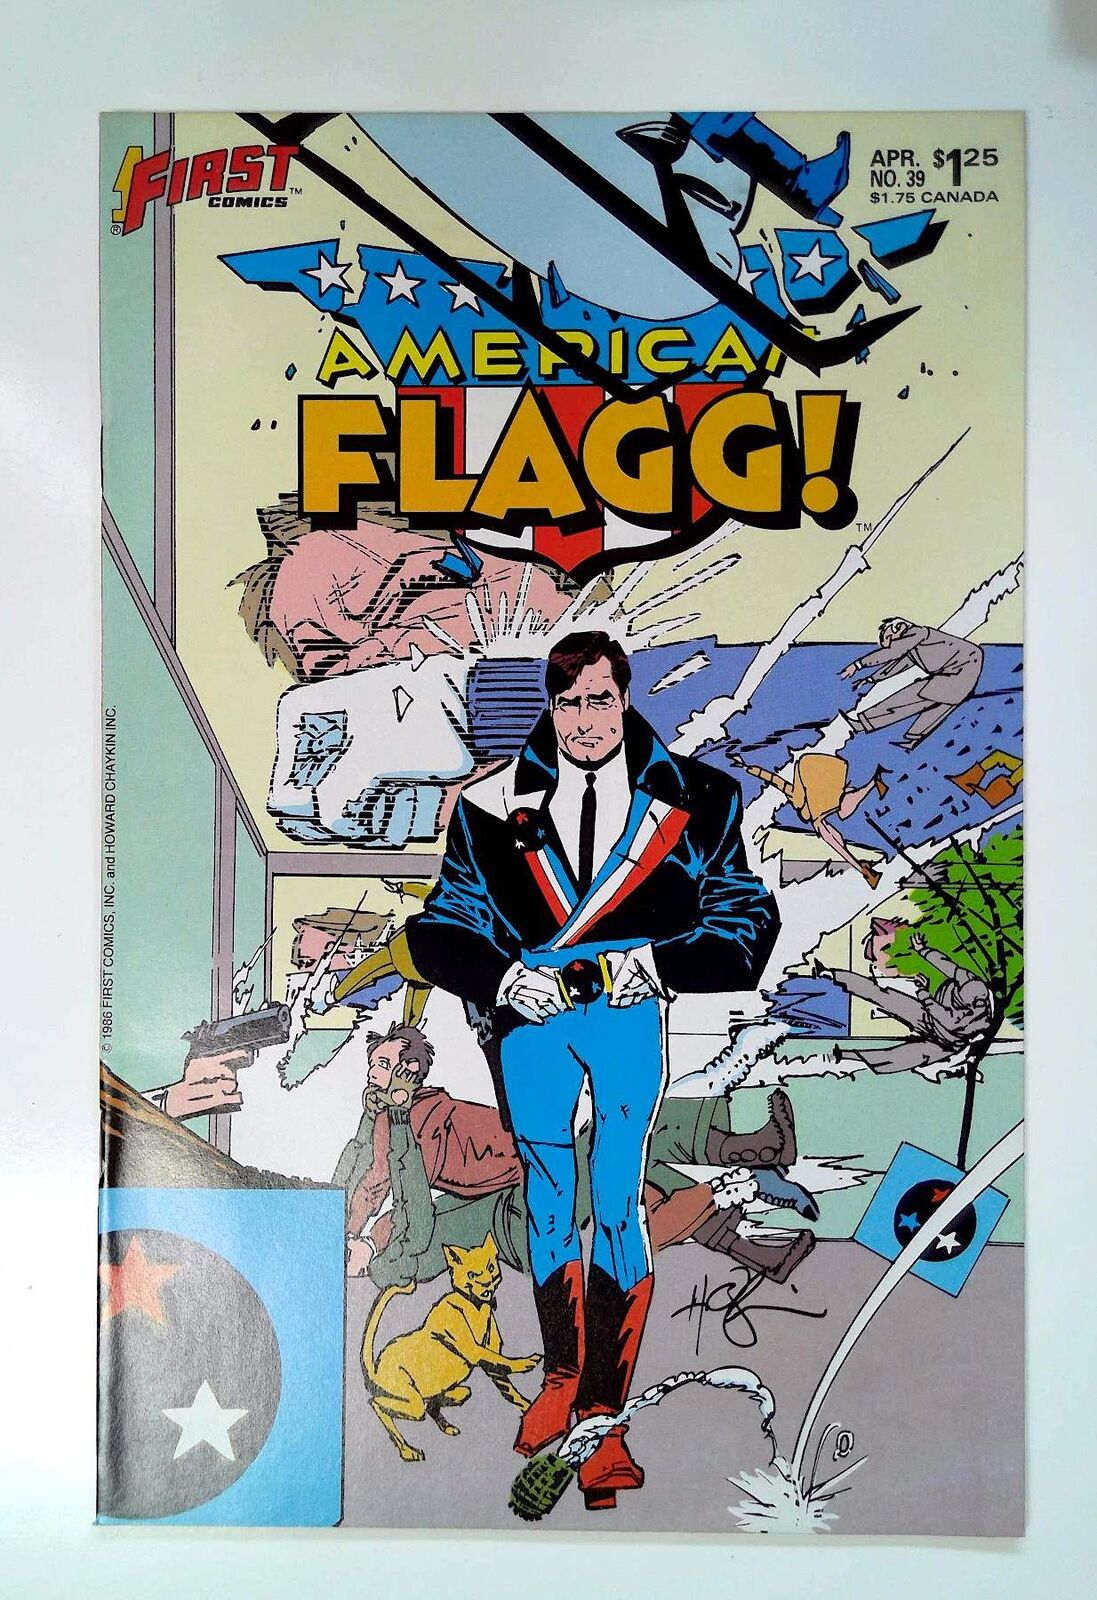 American Flagg #39 First Comics (1987) VF 1st Series 1st Print Comic Book